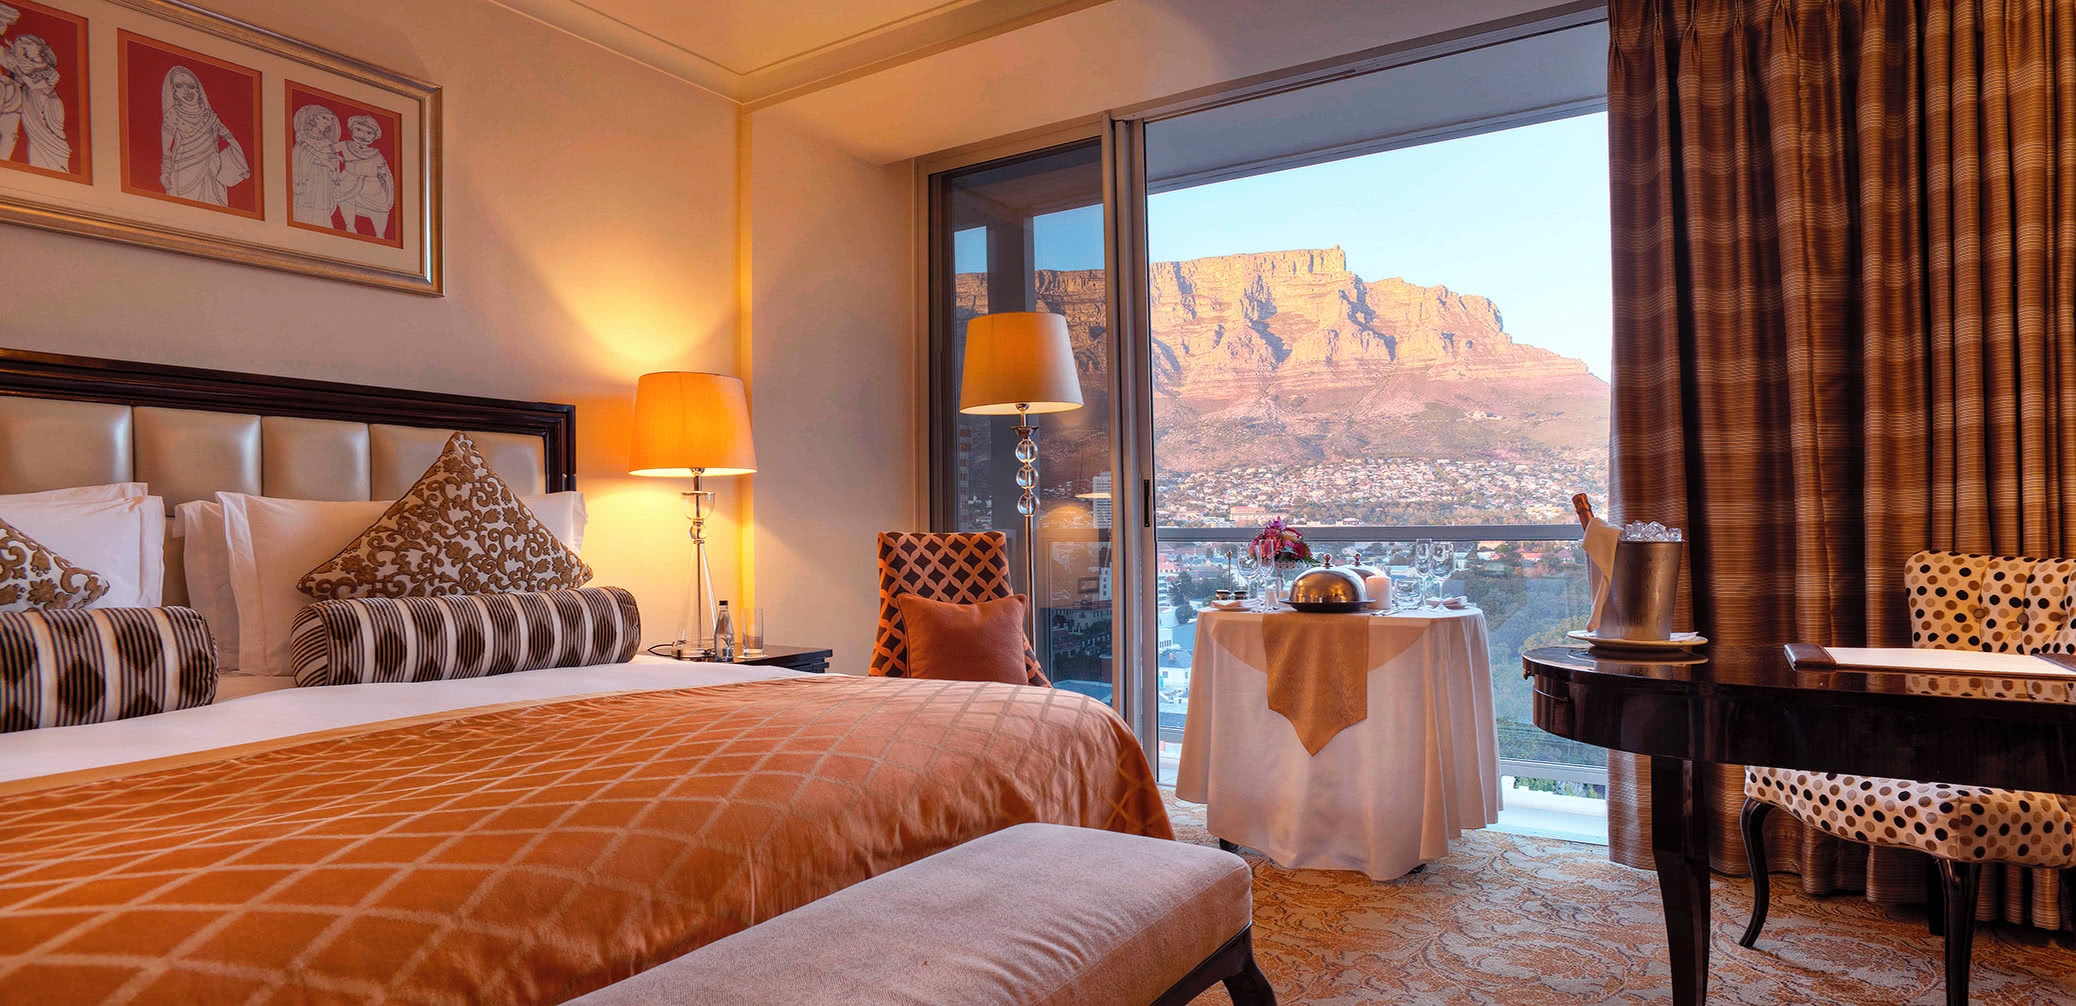 10  Best Luxury Hotels In Cape Town